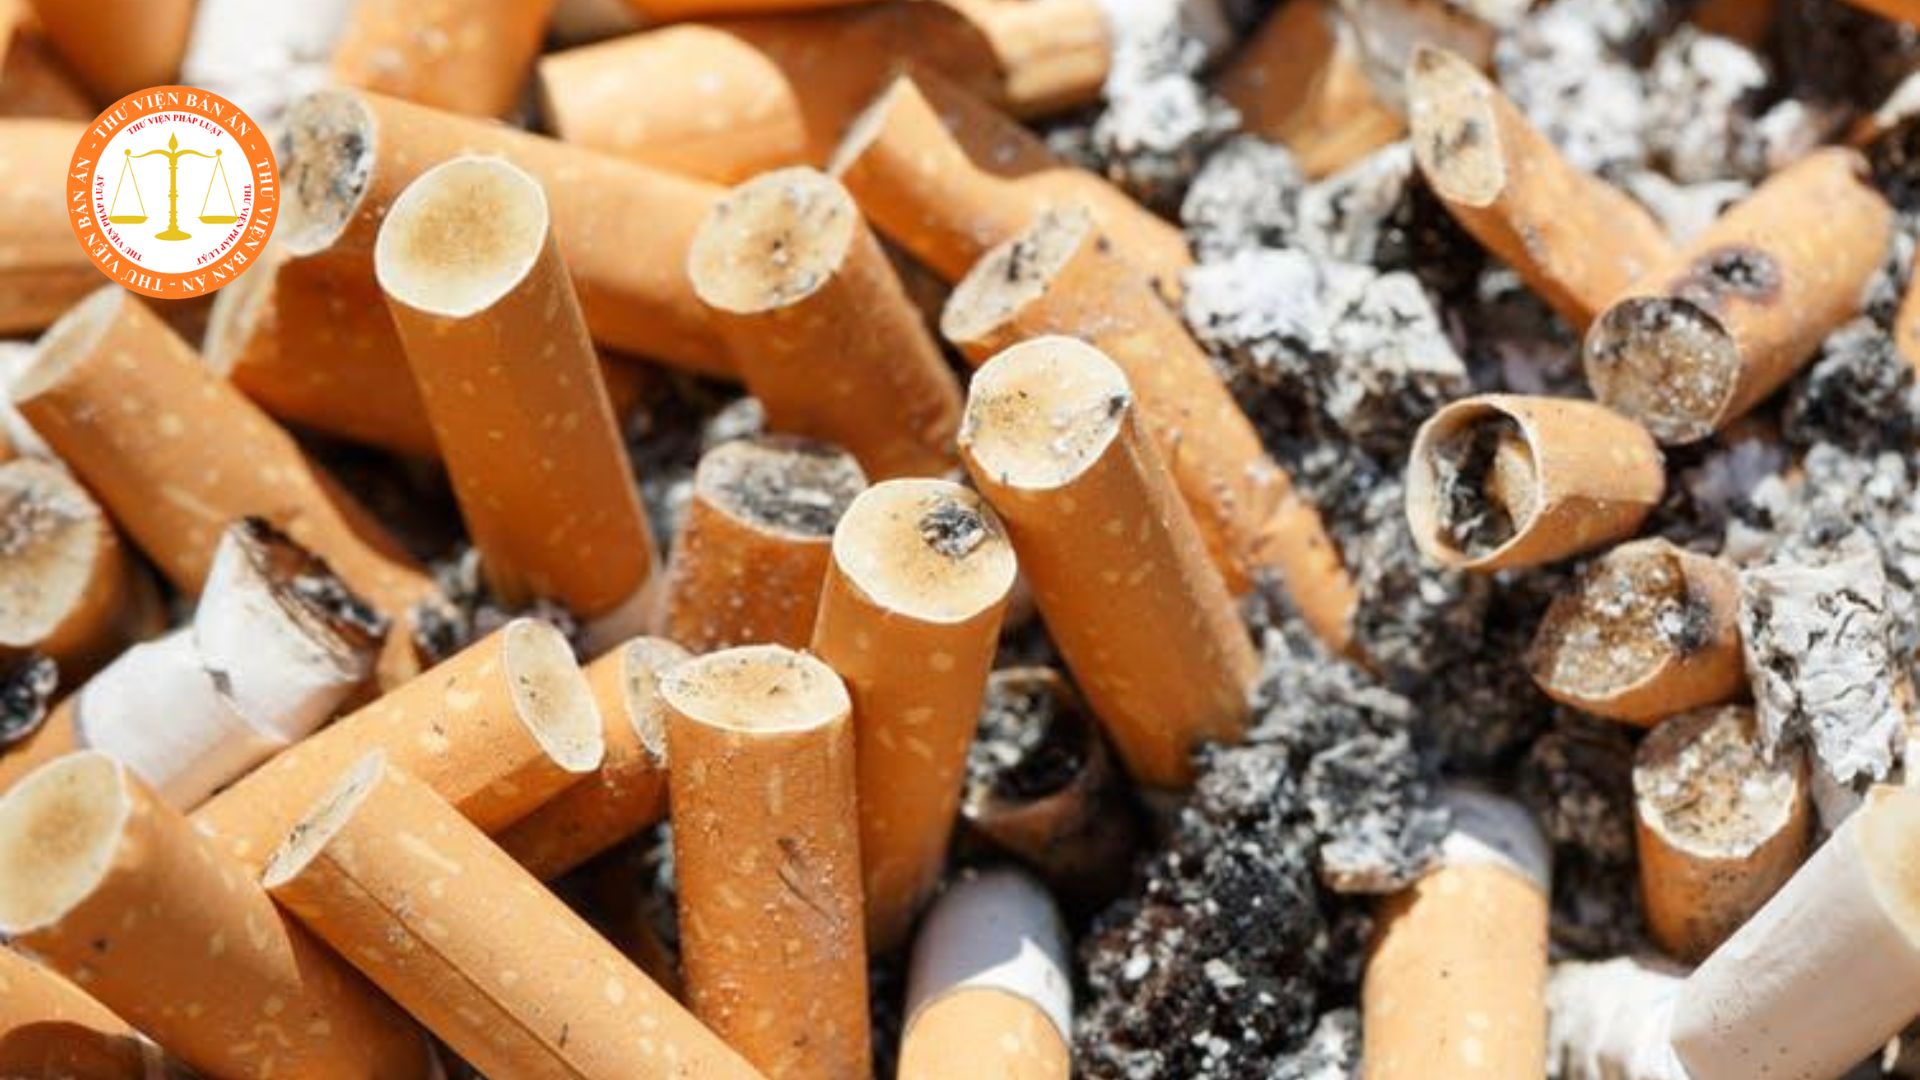 Technical standards for filter cigarettes in Vietnam